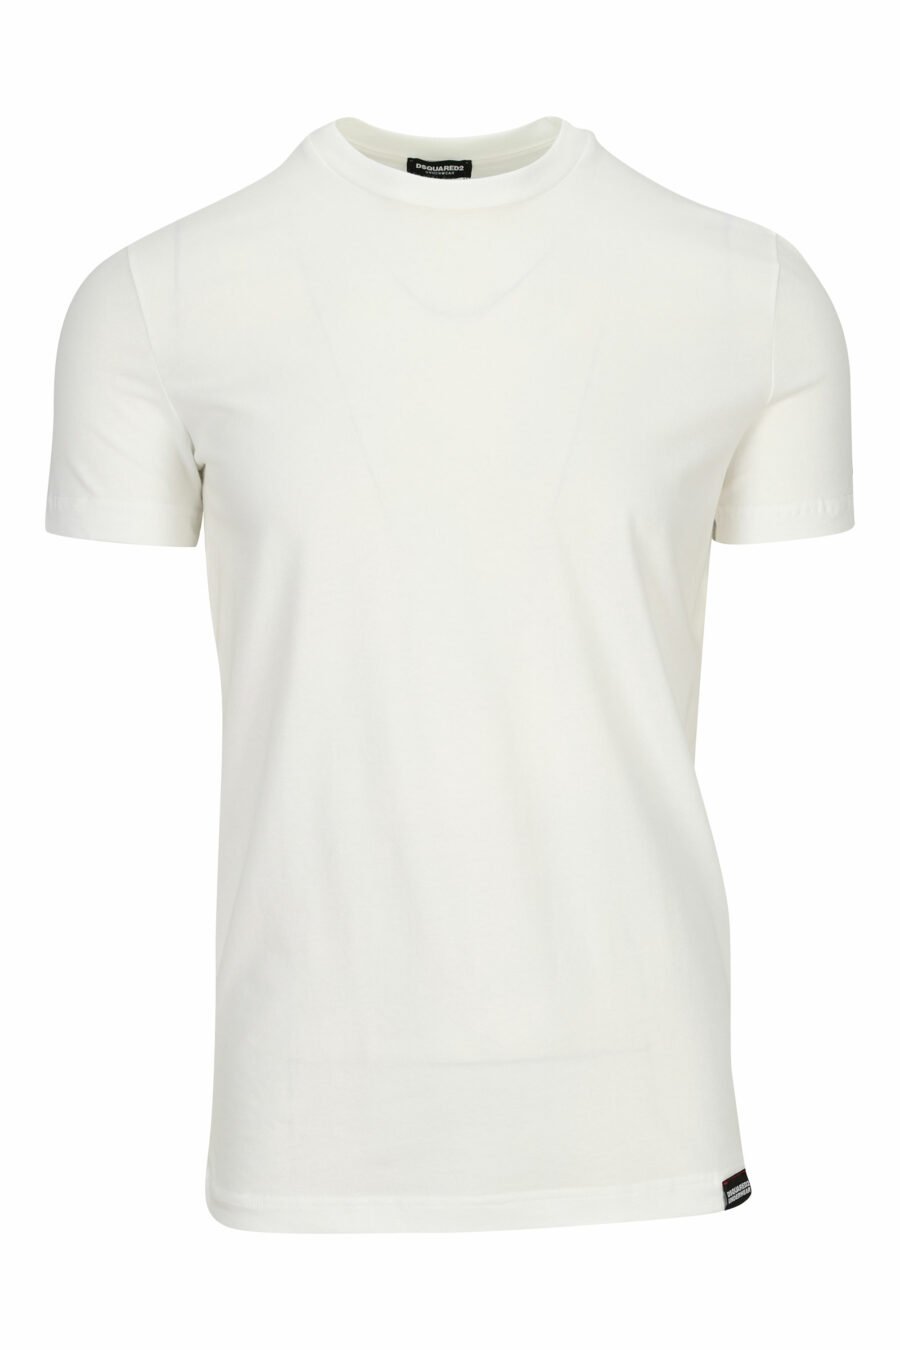 White T-shirt with minilogue "underwear" - 8032674811561